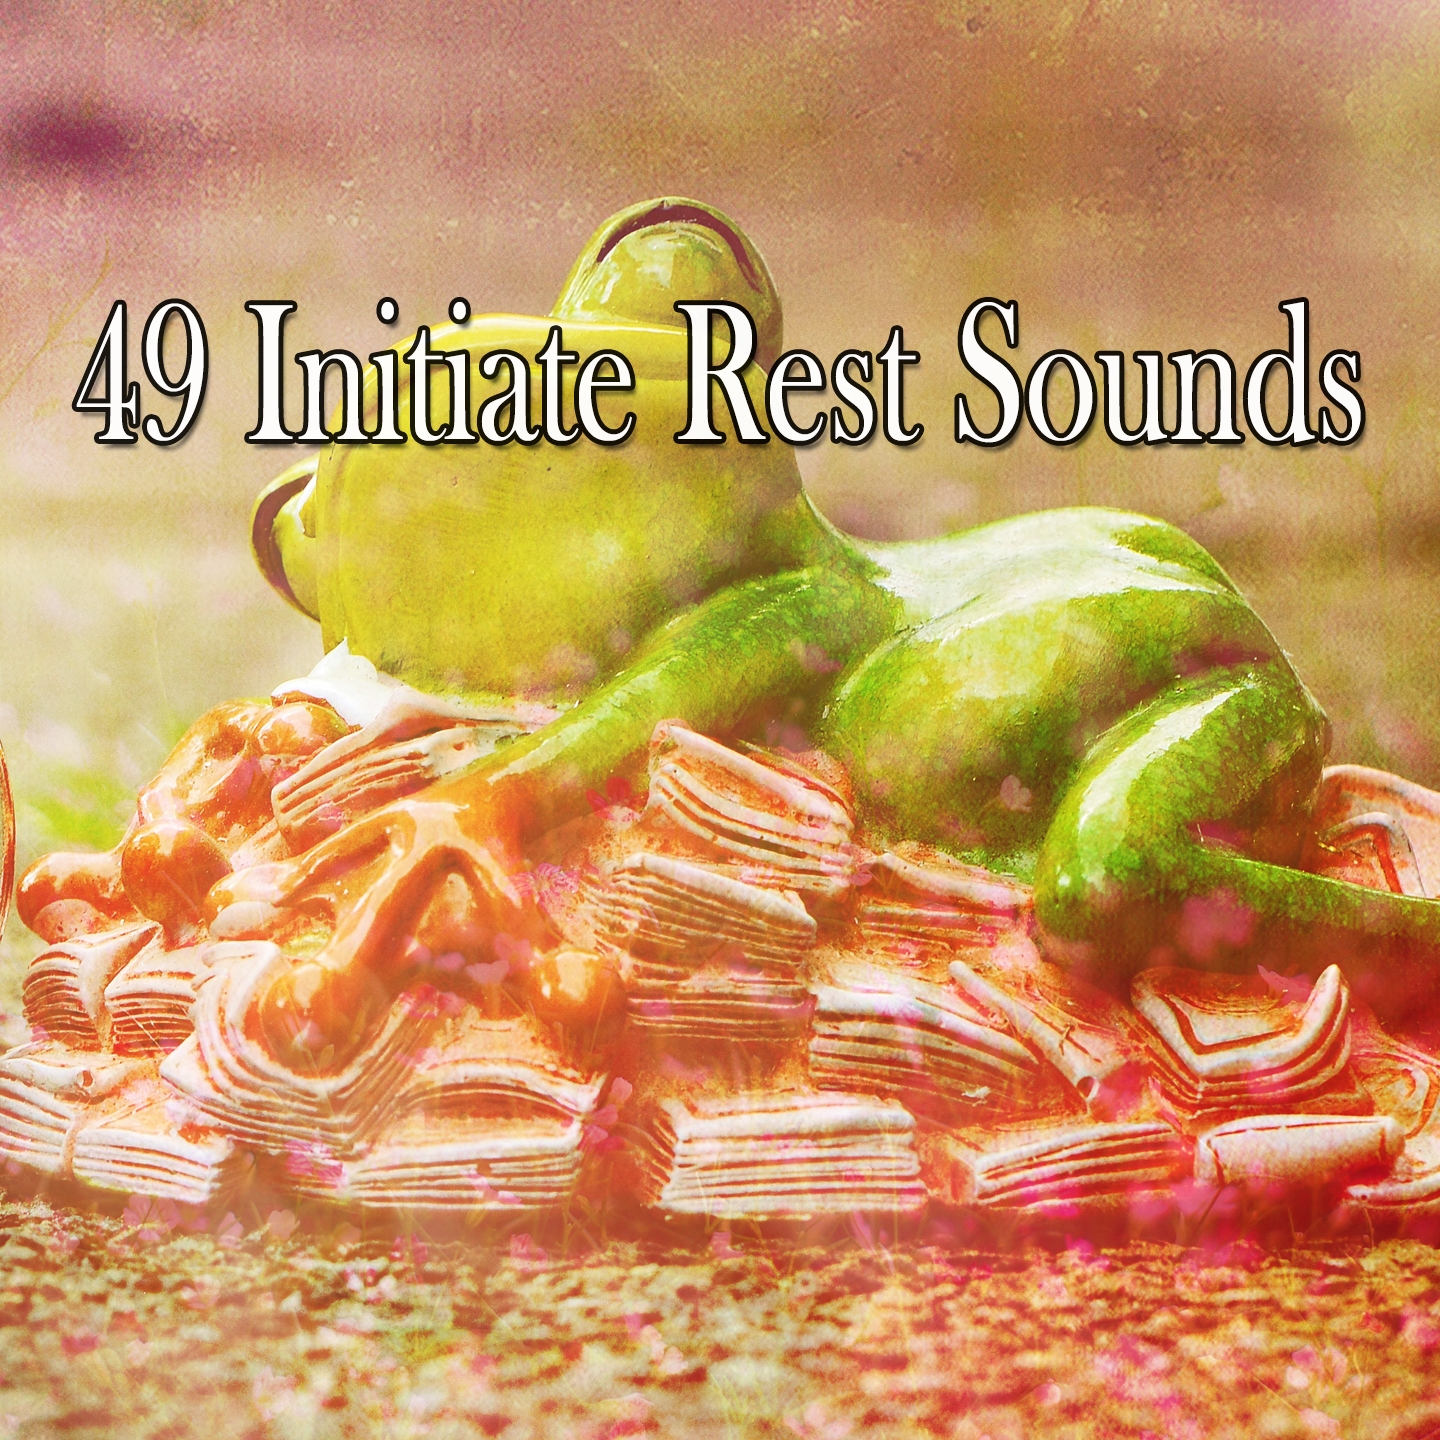 49 Initiate Rest Sounds